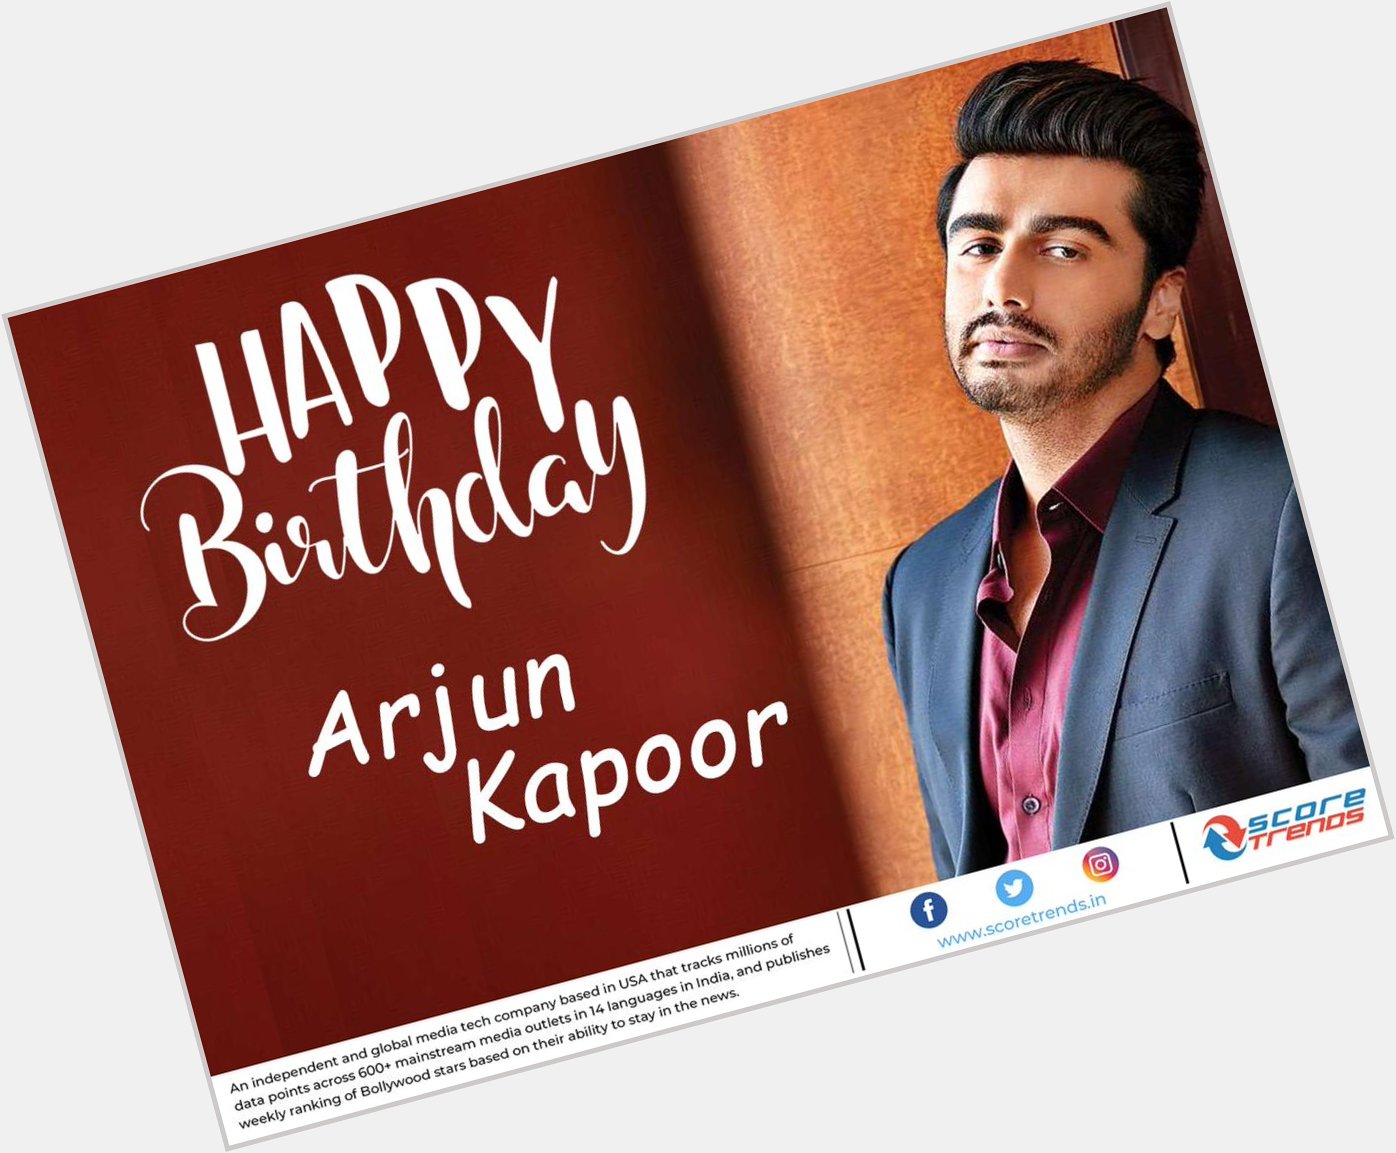 Score Trends wishes Arjun Kapoor a Happy Birthday!! 